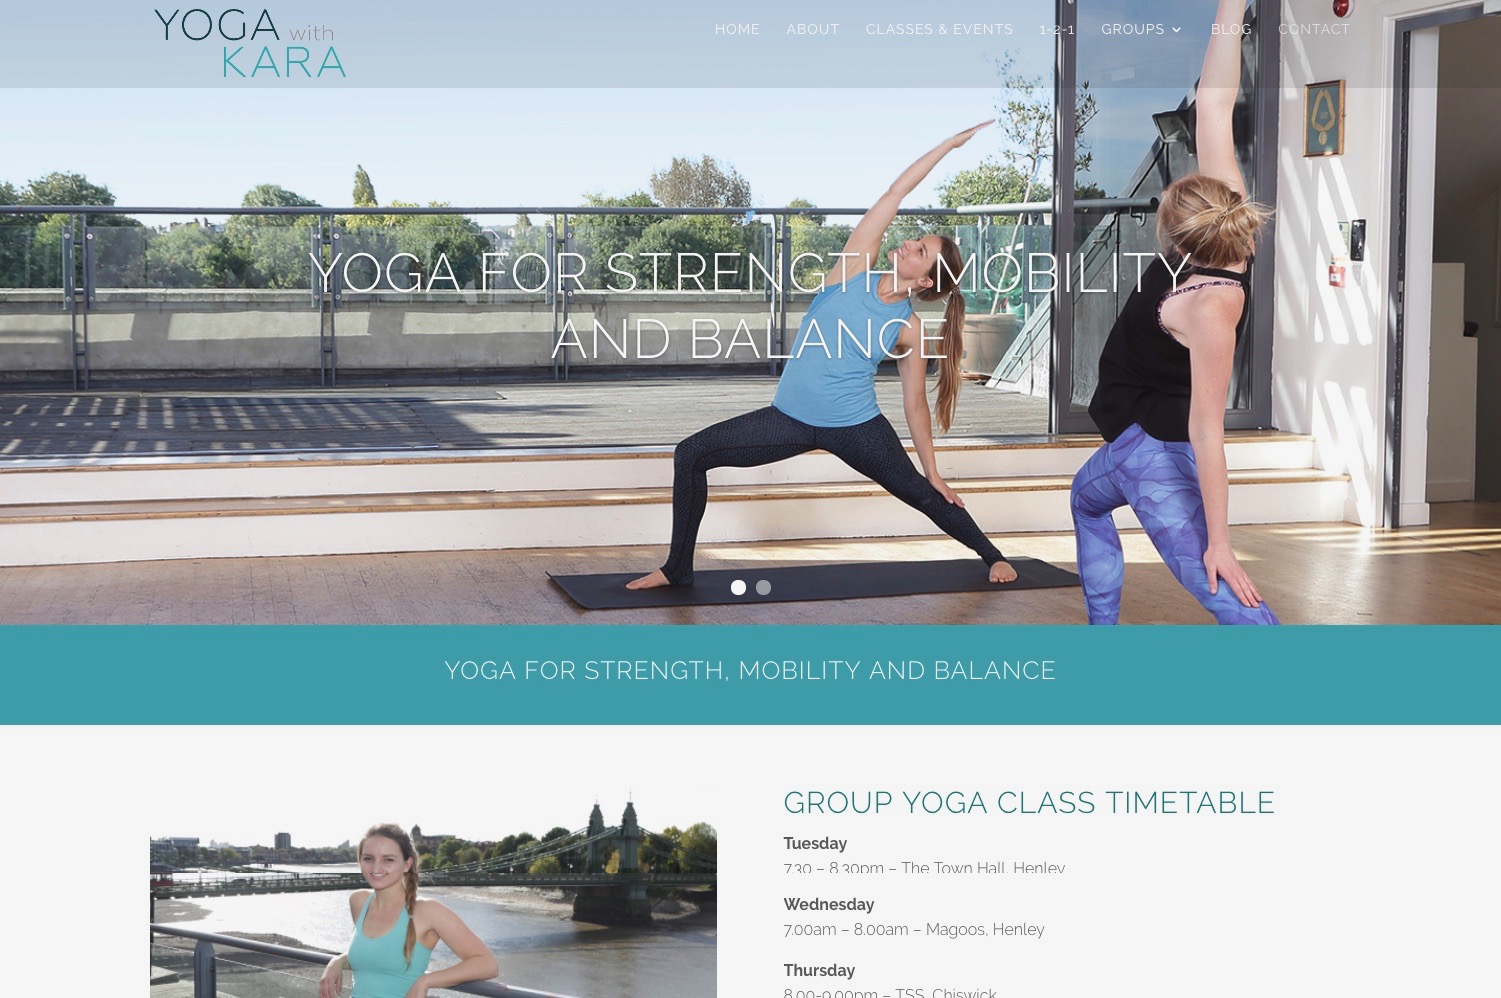 Yoga Website Design – Yoga With Kara